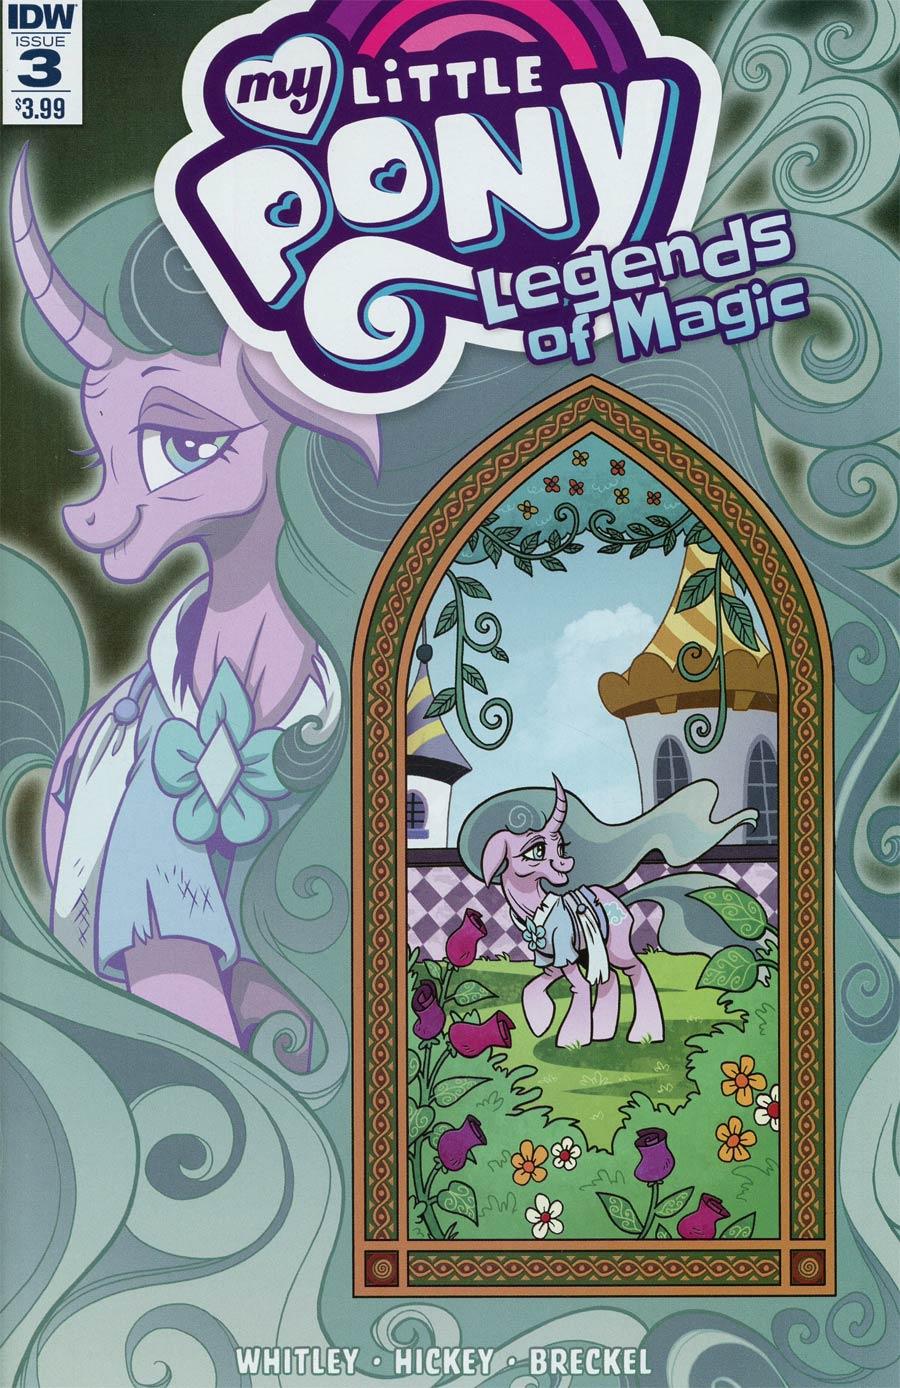 My Little Pony Legends Of Magic Vol. 1 #3